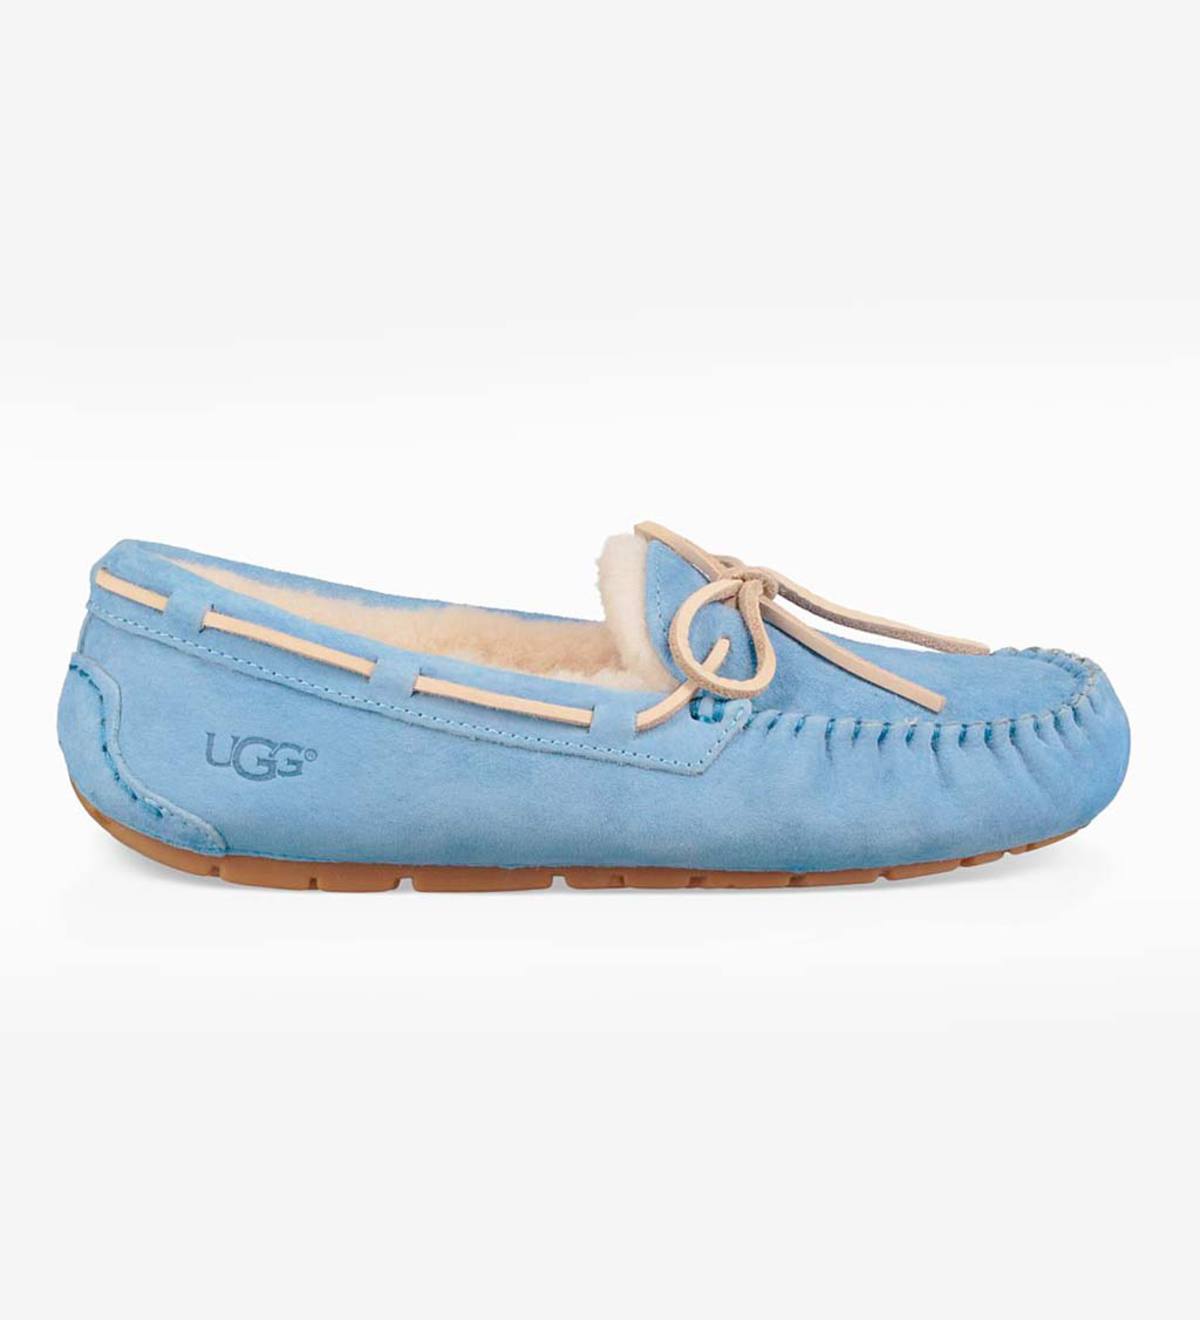 UGG Women's Dakota Moccasin Slippers - Sky Blue - Size 8